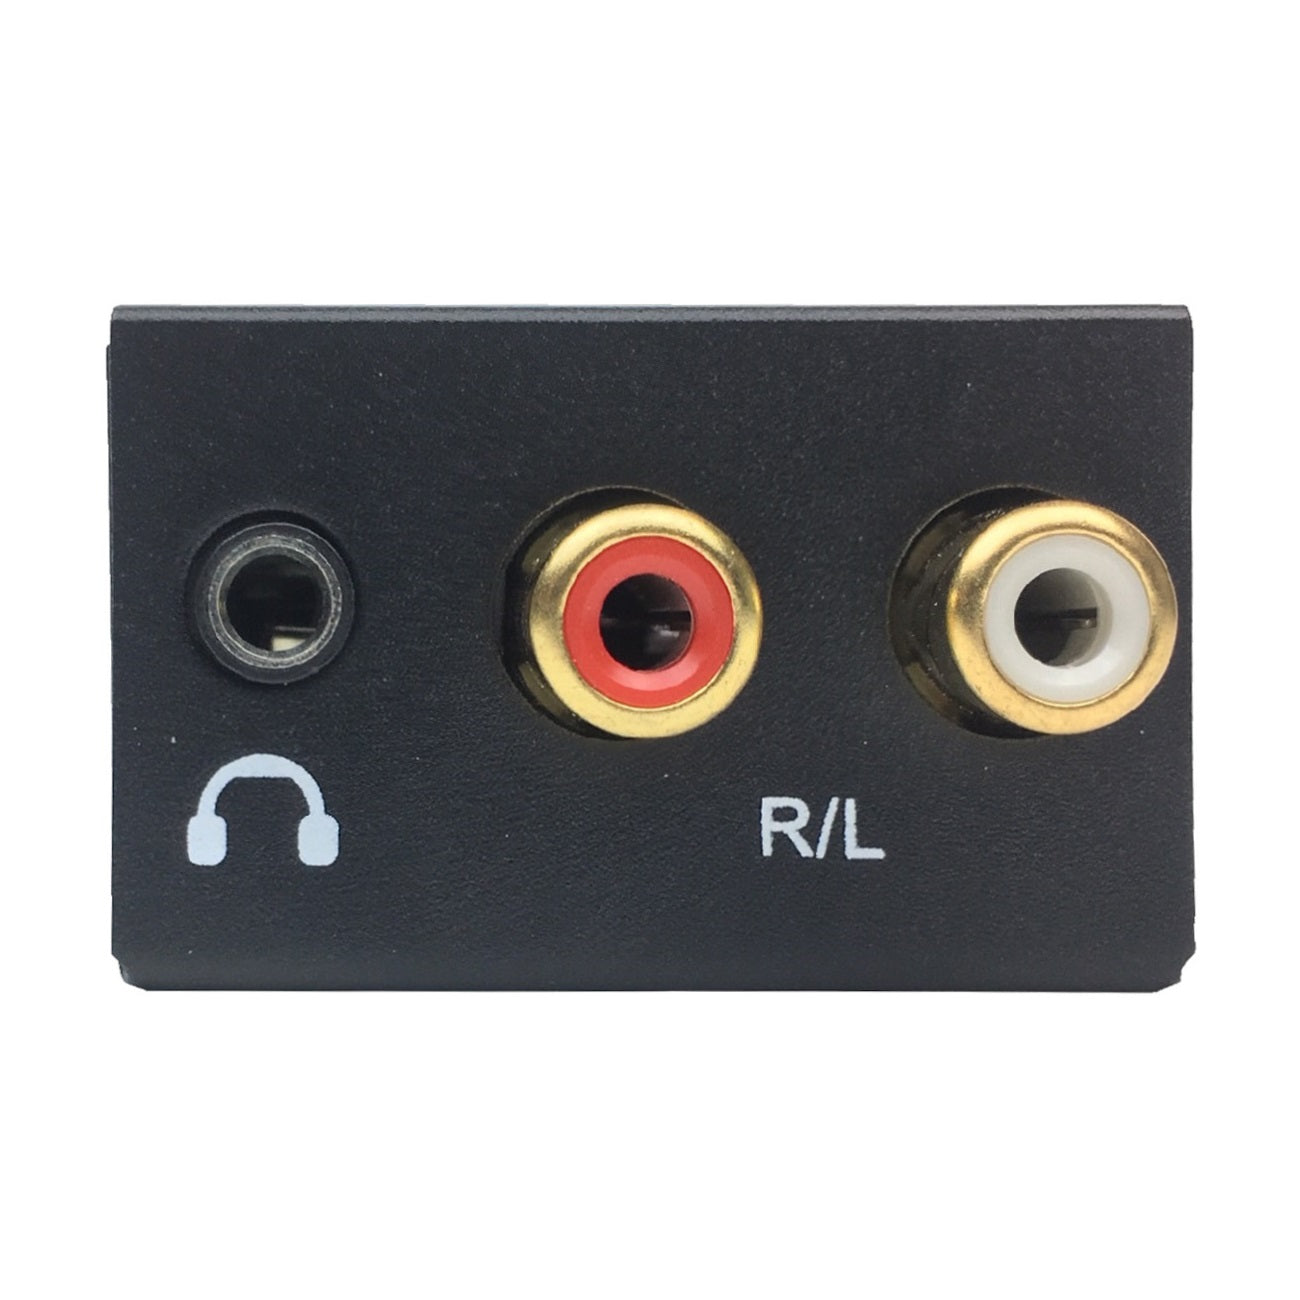 ImPro AC-98A Optical SPDIF/Coaxial Digital to RCA L/R Analog Audio Converter